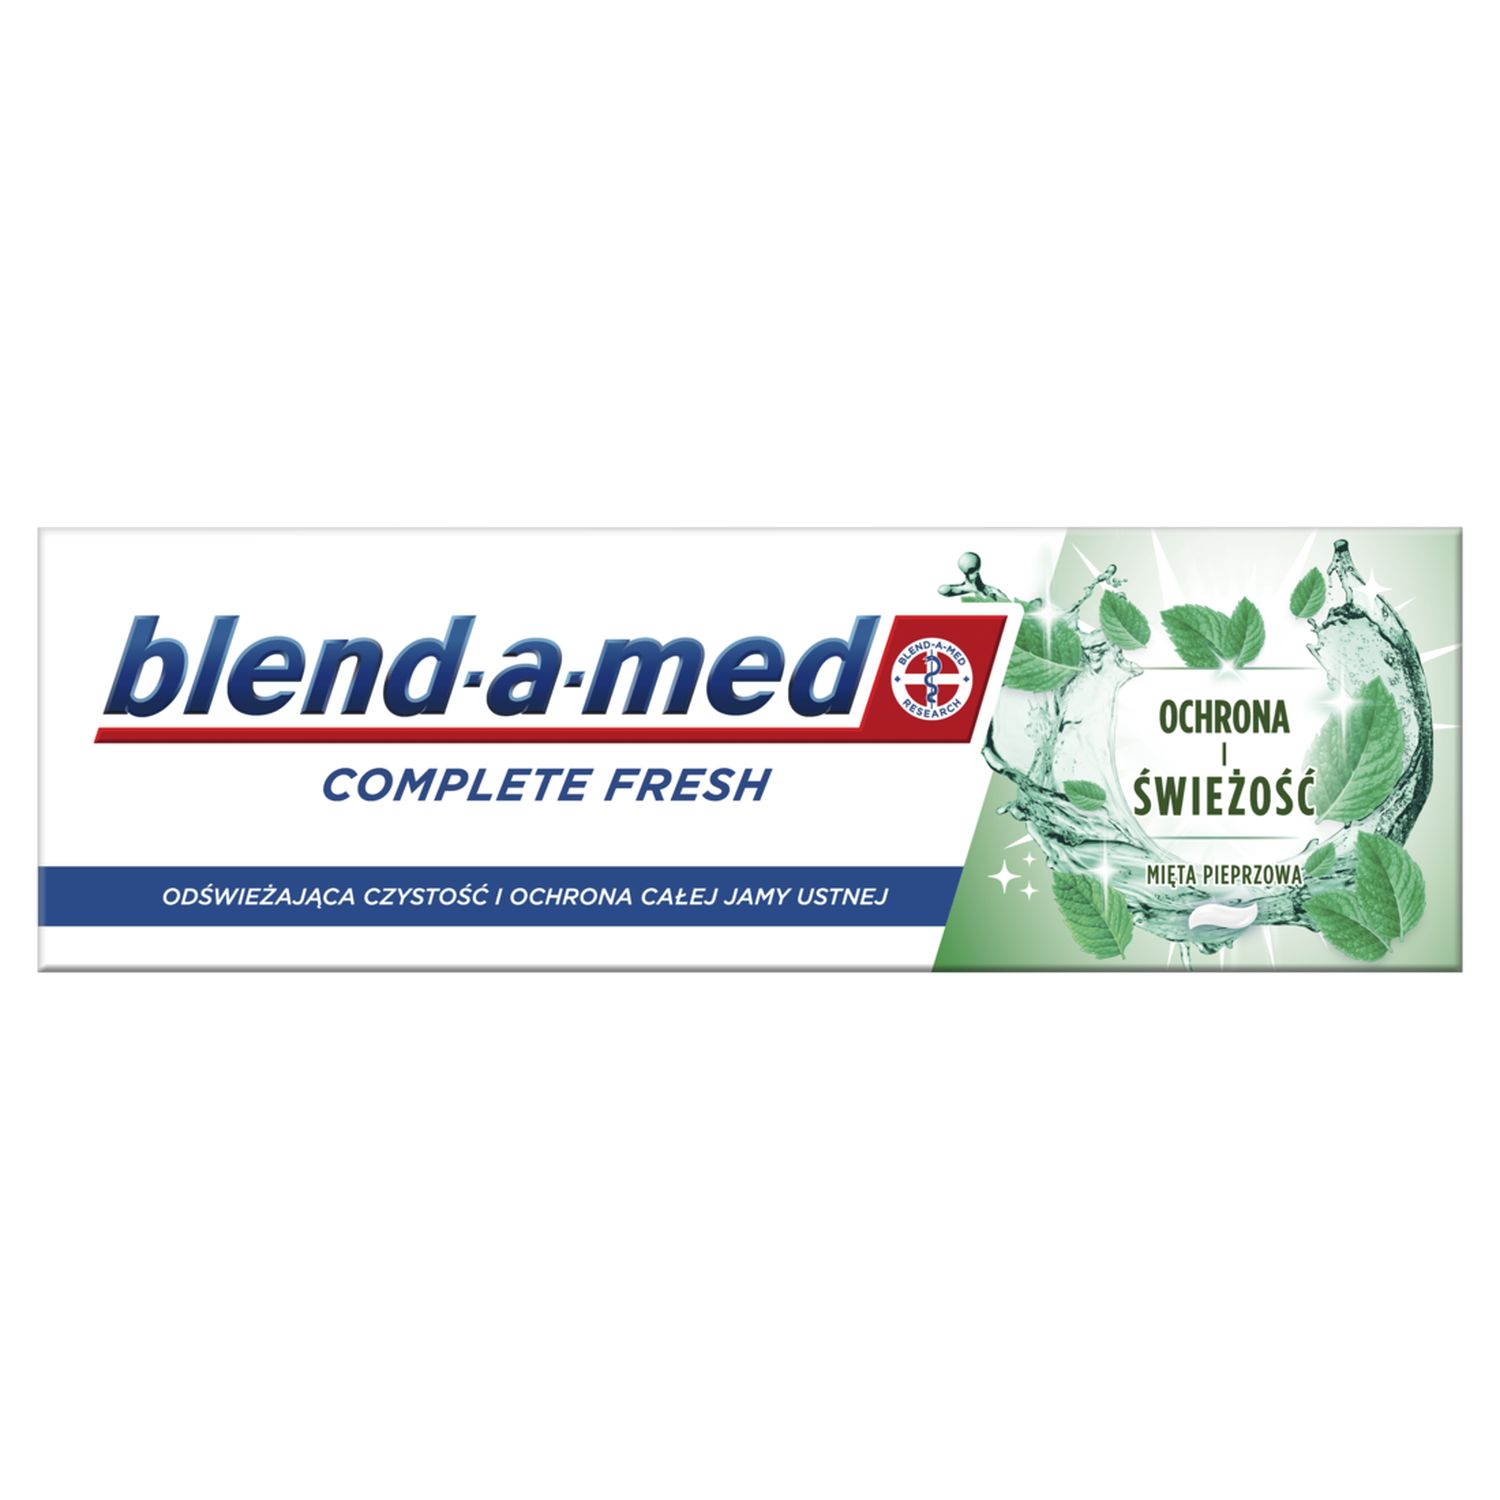 Зубная паста Blend-a-med Complete Fresh Защита и свежесть 75 мл - фото 3